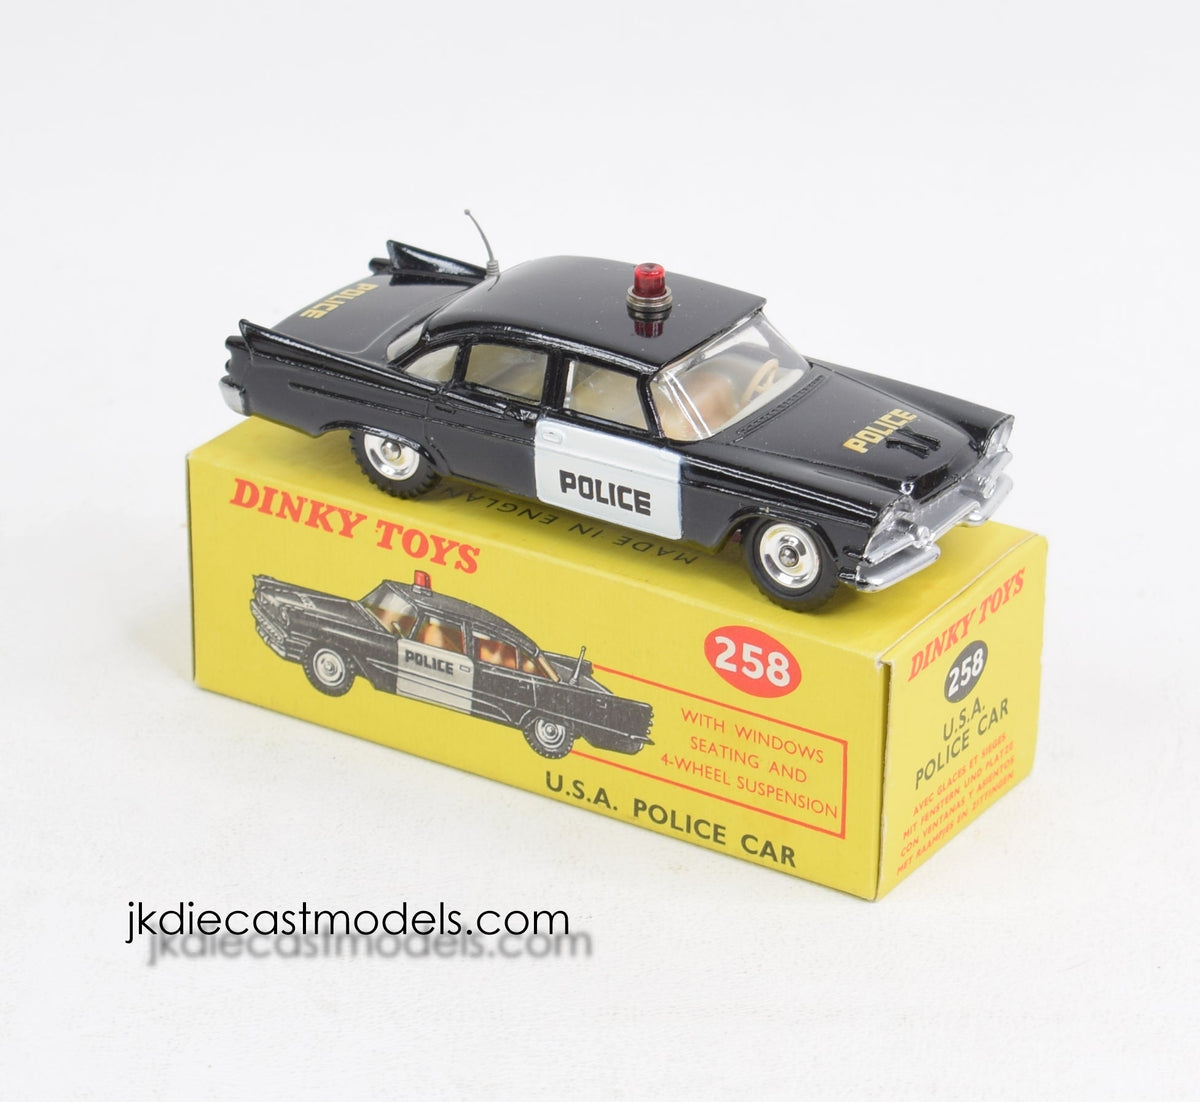 Dinky toys 258 Dodge Royal Sedan Virtually Mint/Boxed 'Lansdown Collection'